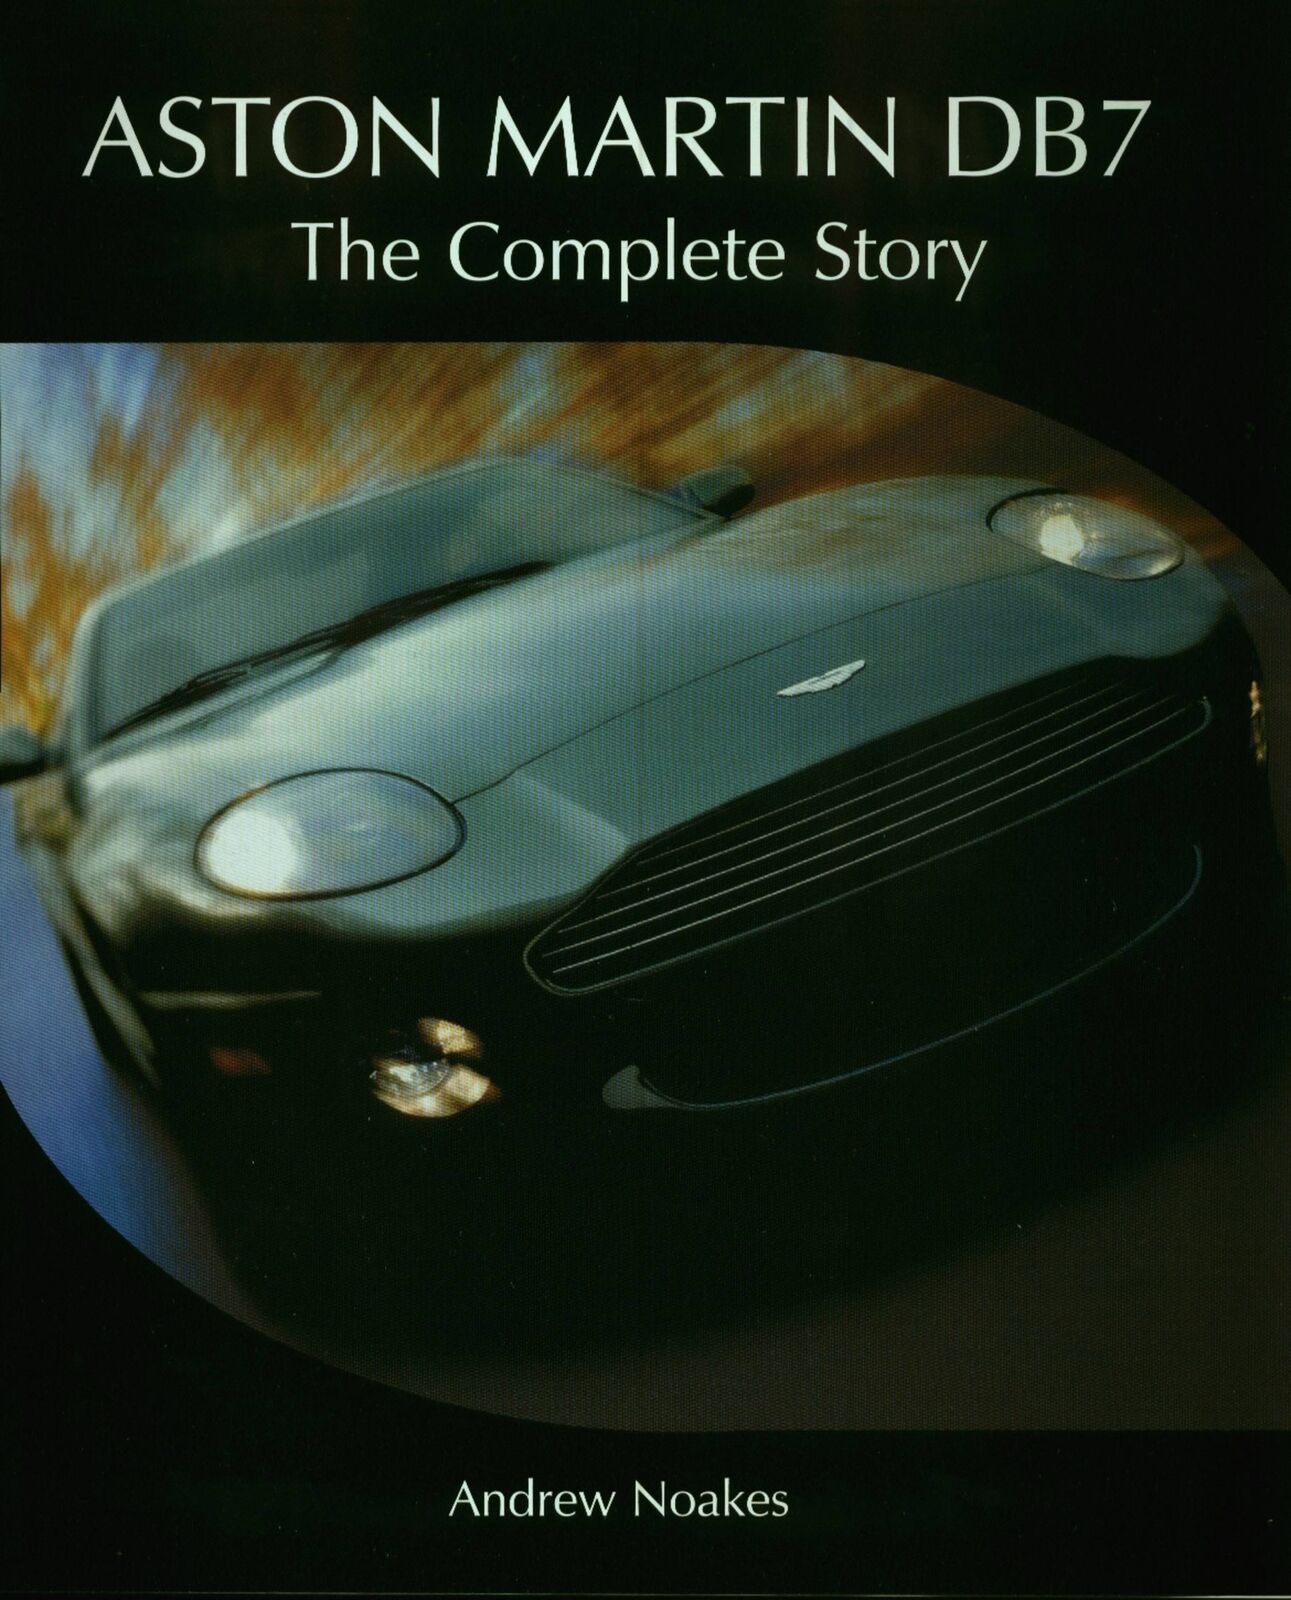 Aston Martin DB7 The Complete Story James Bond car book